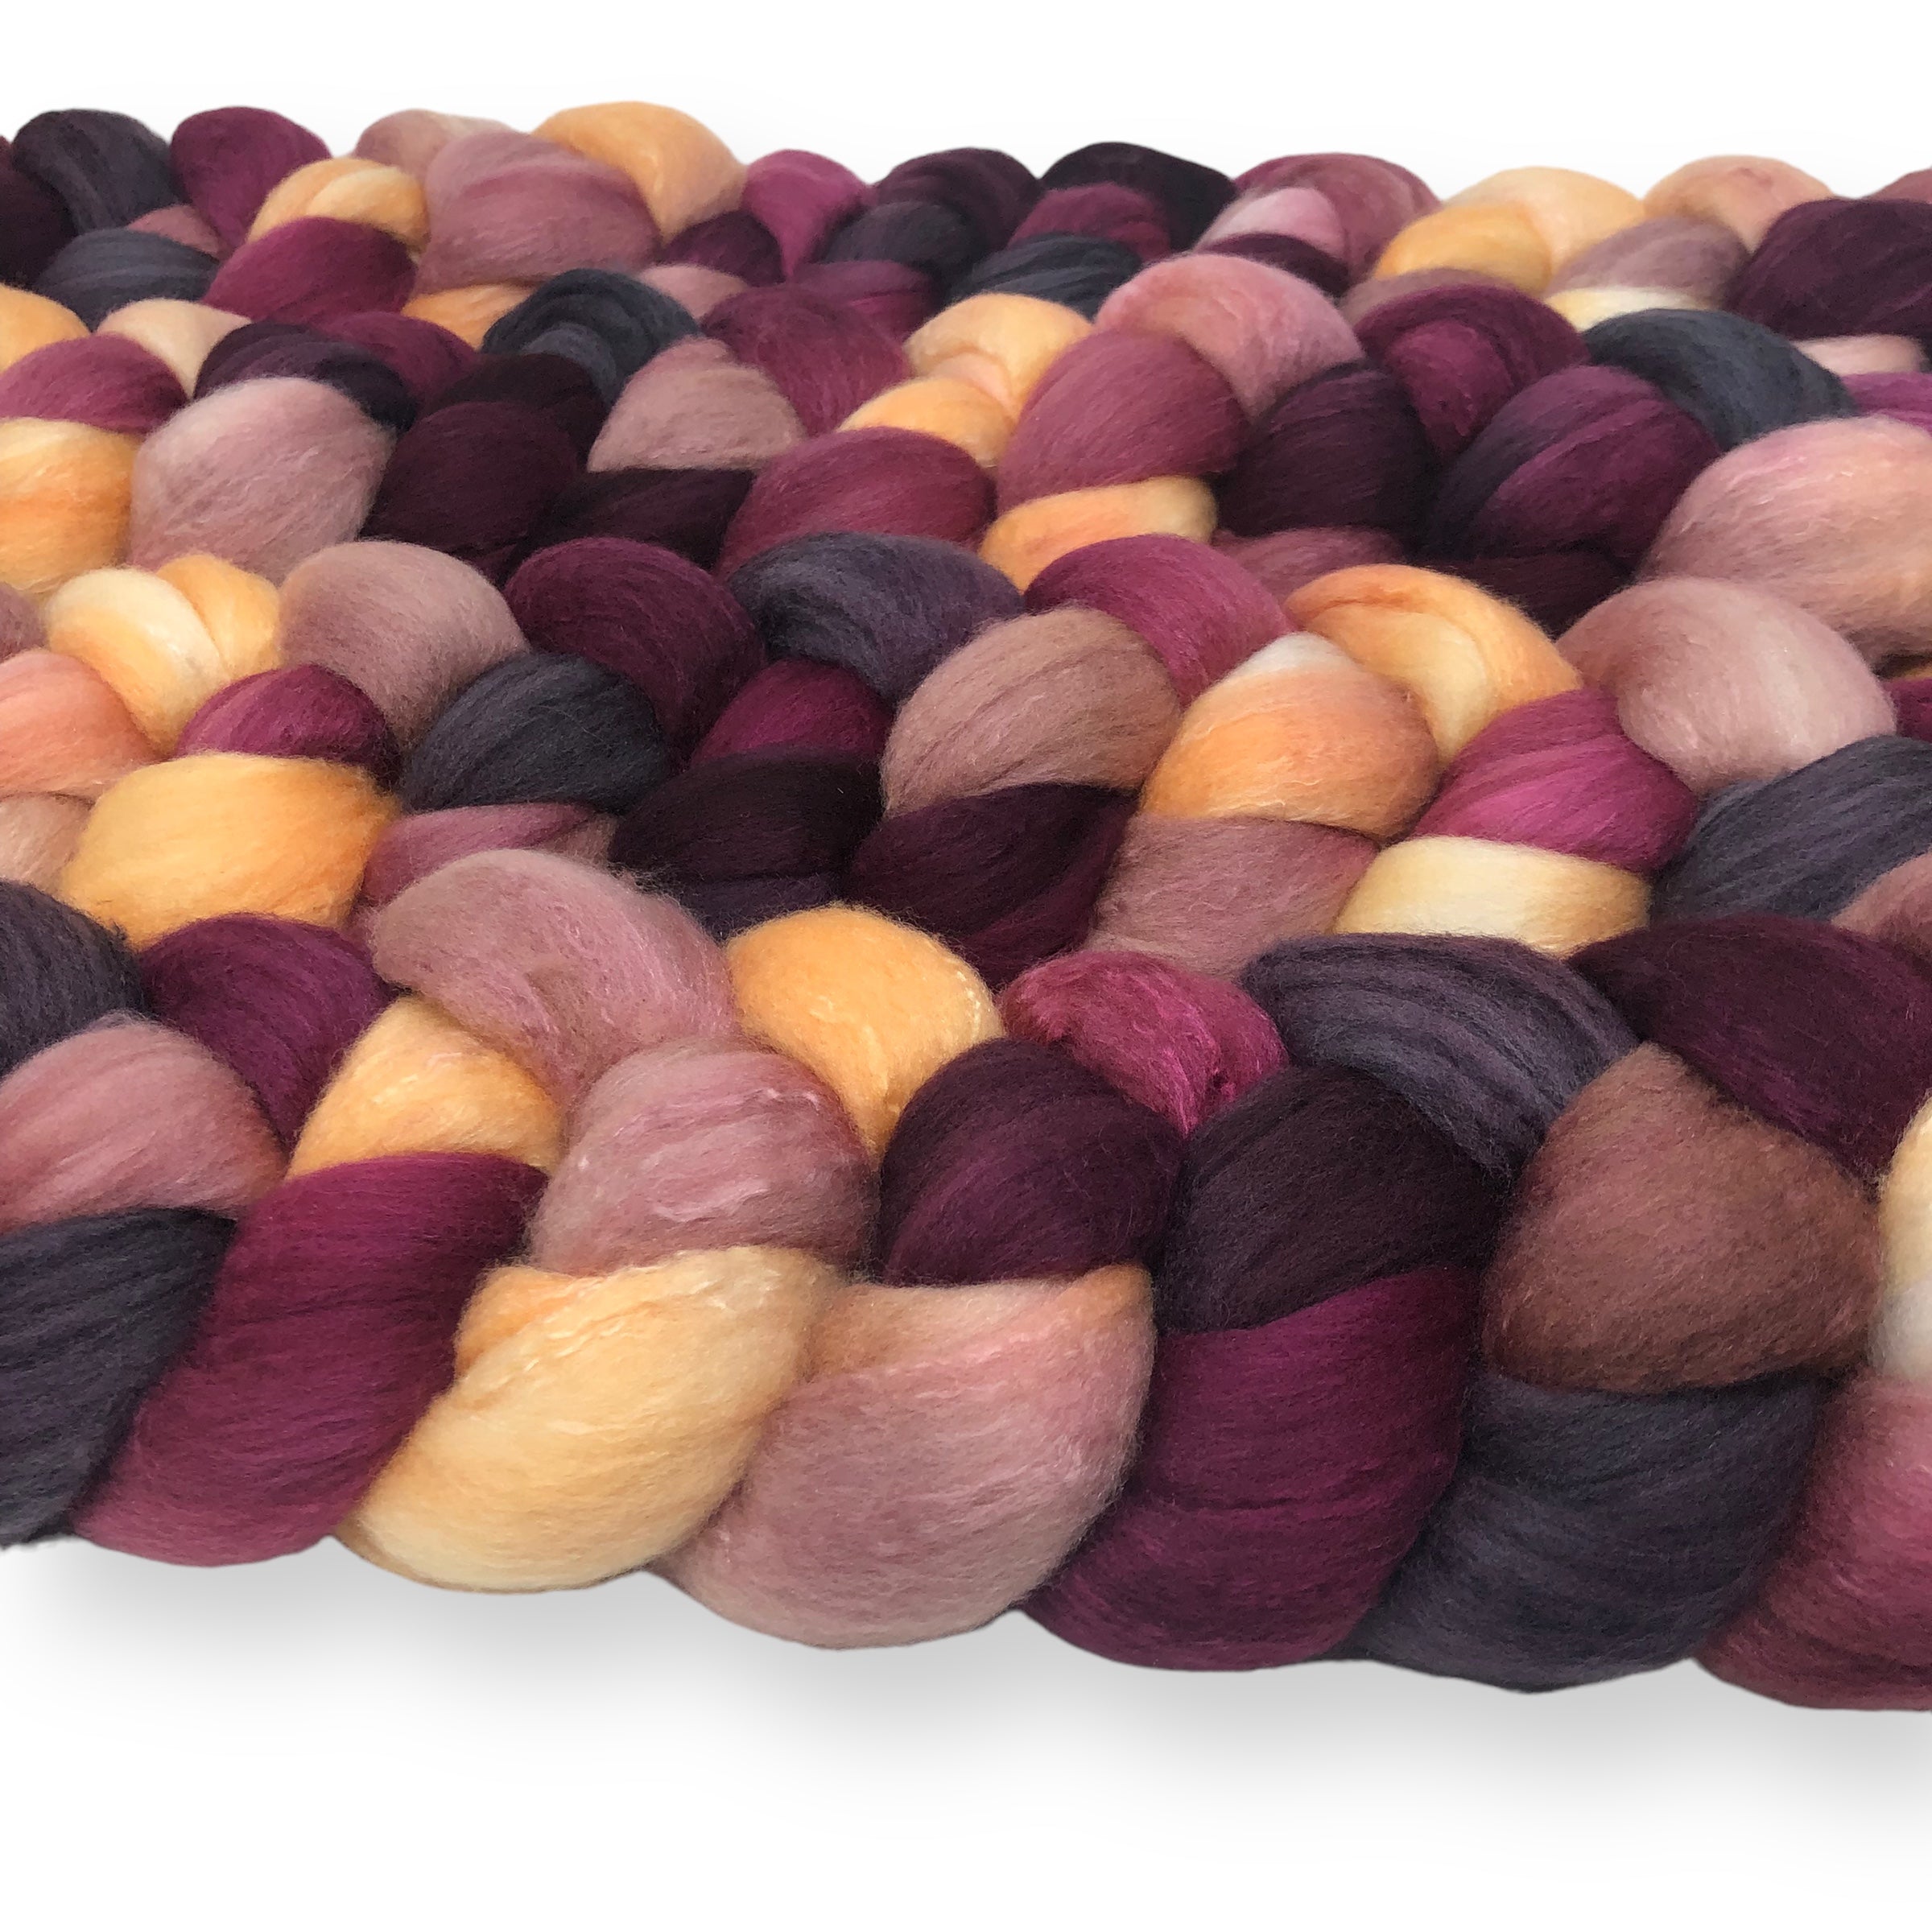 Truffles - US Fine Wool and Silk Top